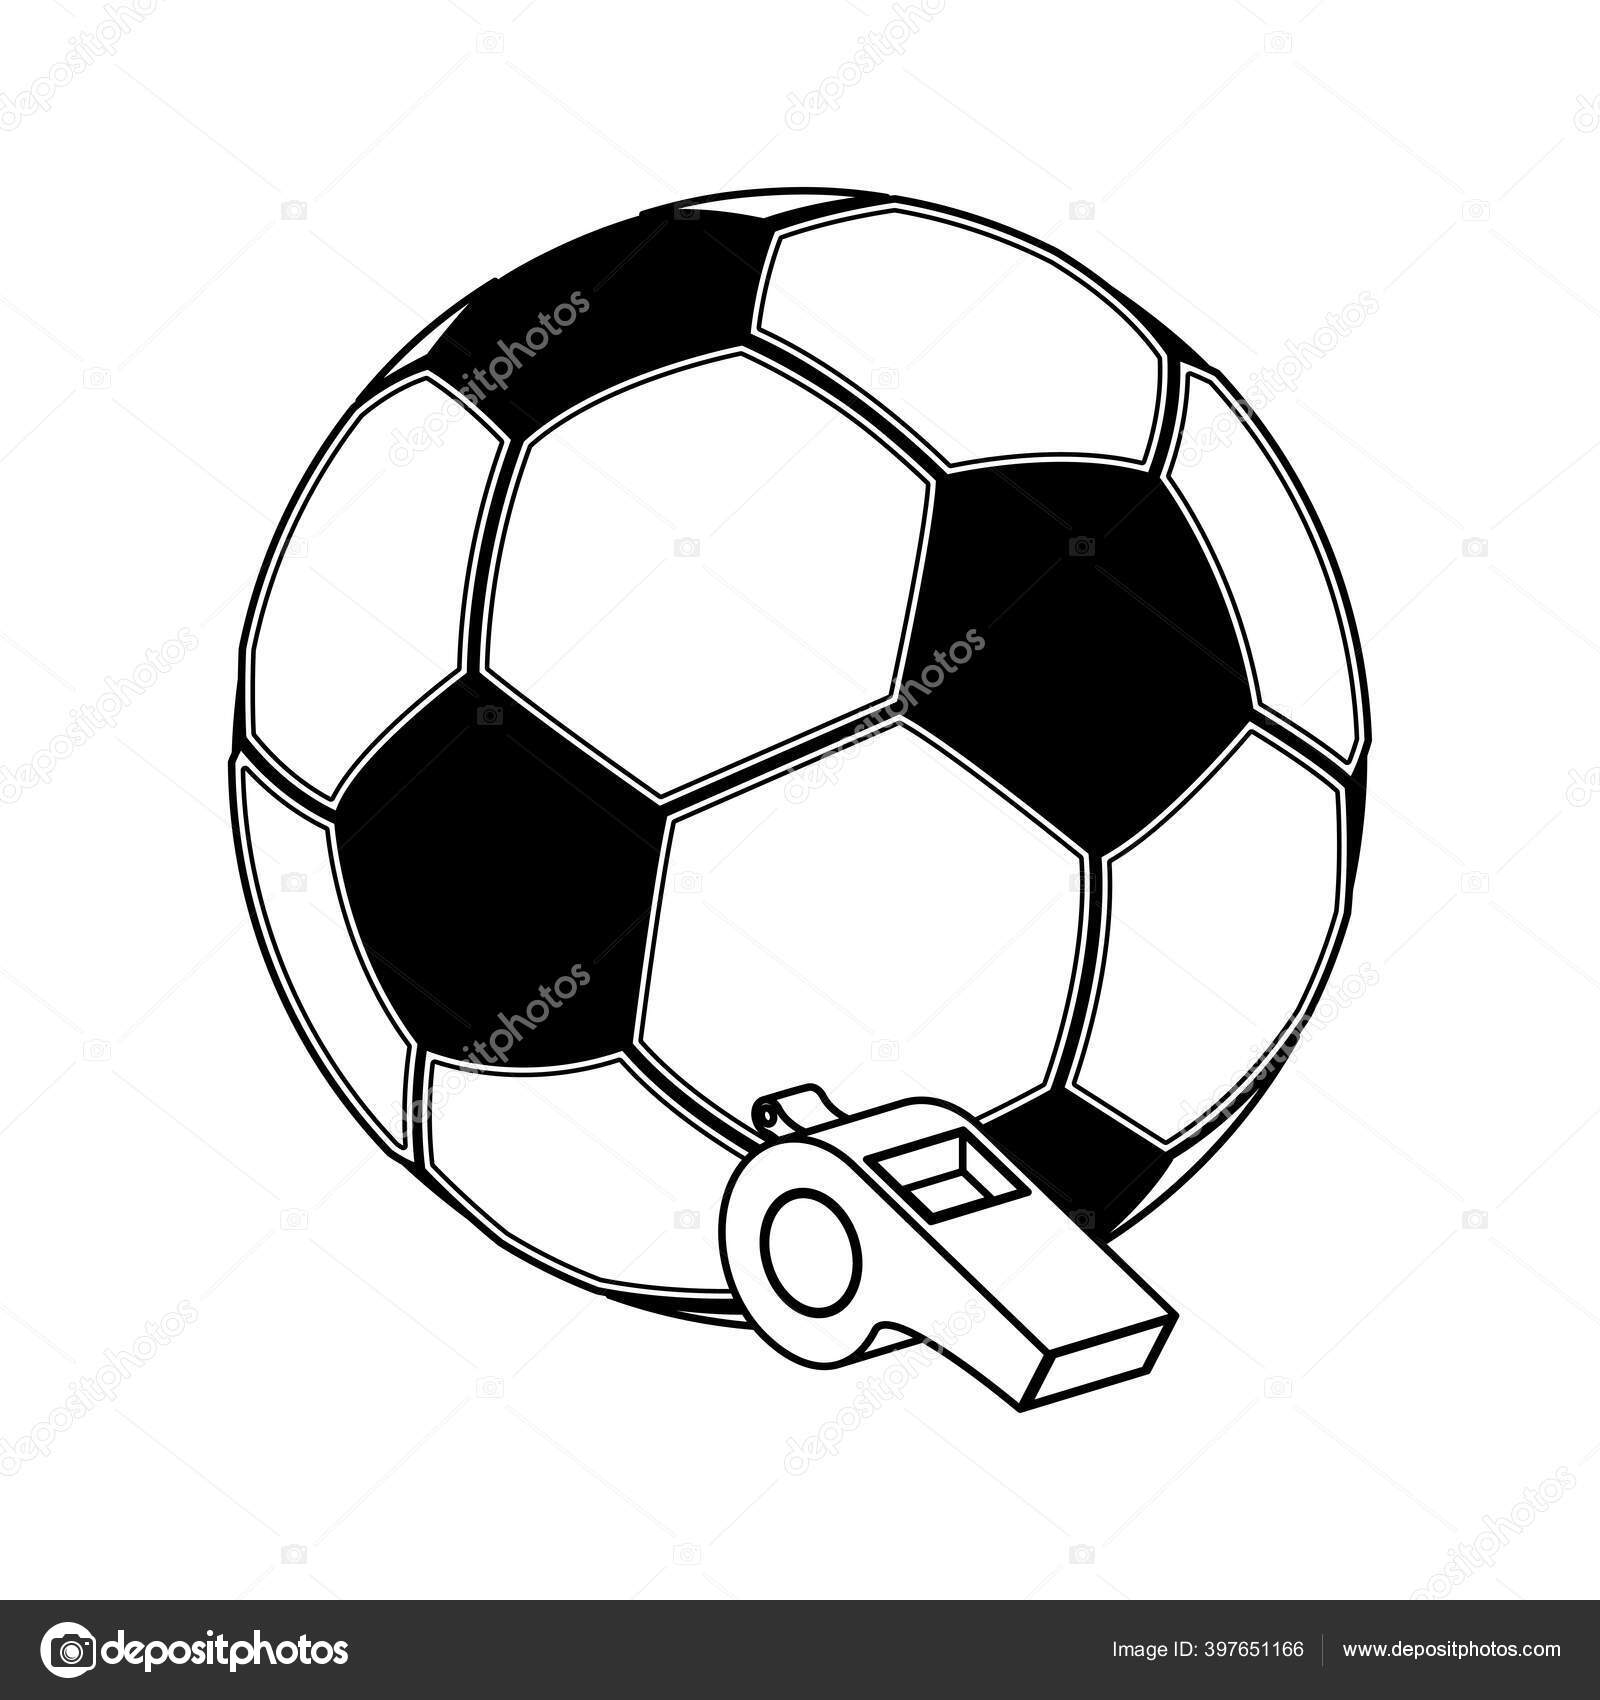 Fussball Sport Ballon Fussball Mit Schiedsrichterpfiff Vektorgrafik Lizenzfreie Grafiken C Yupiramos Depositphotos